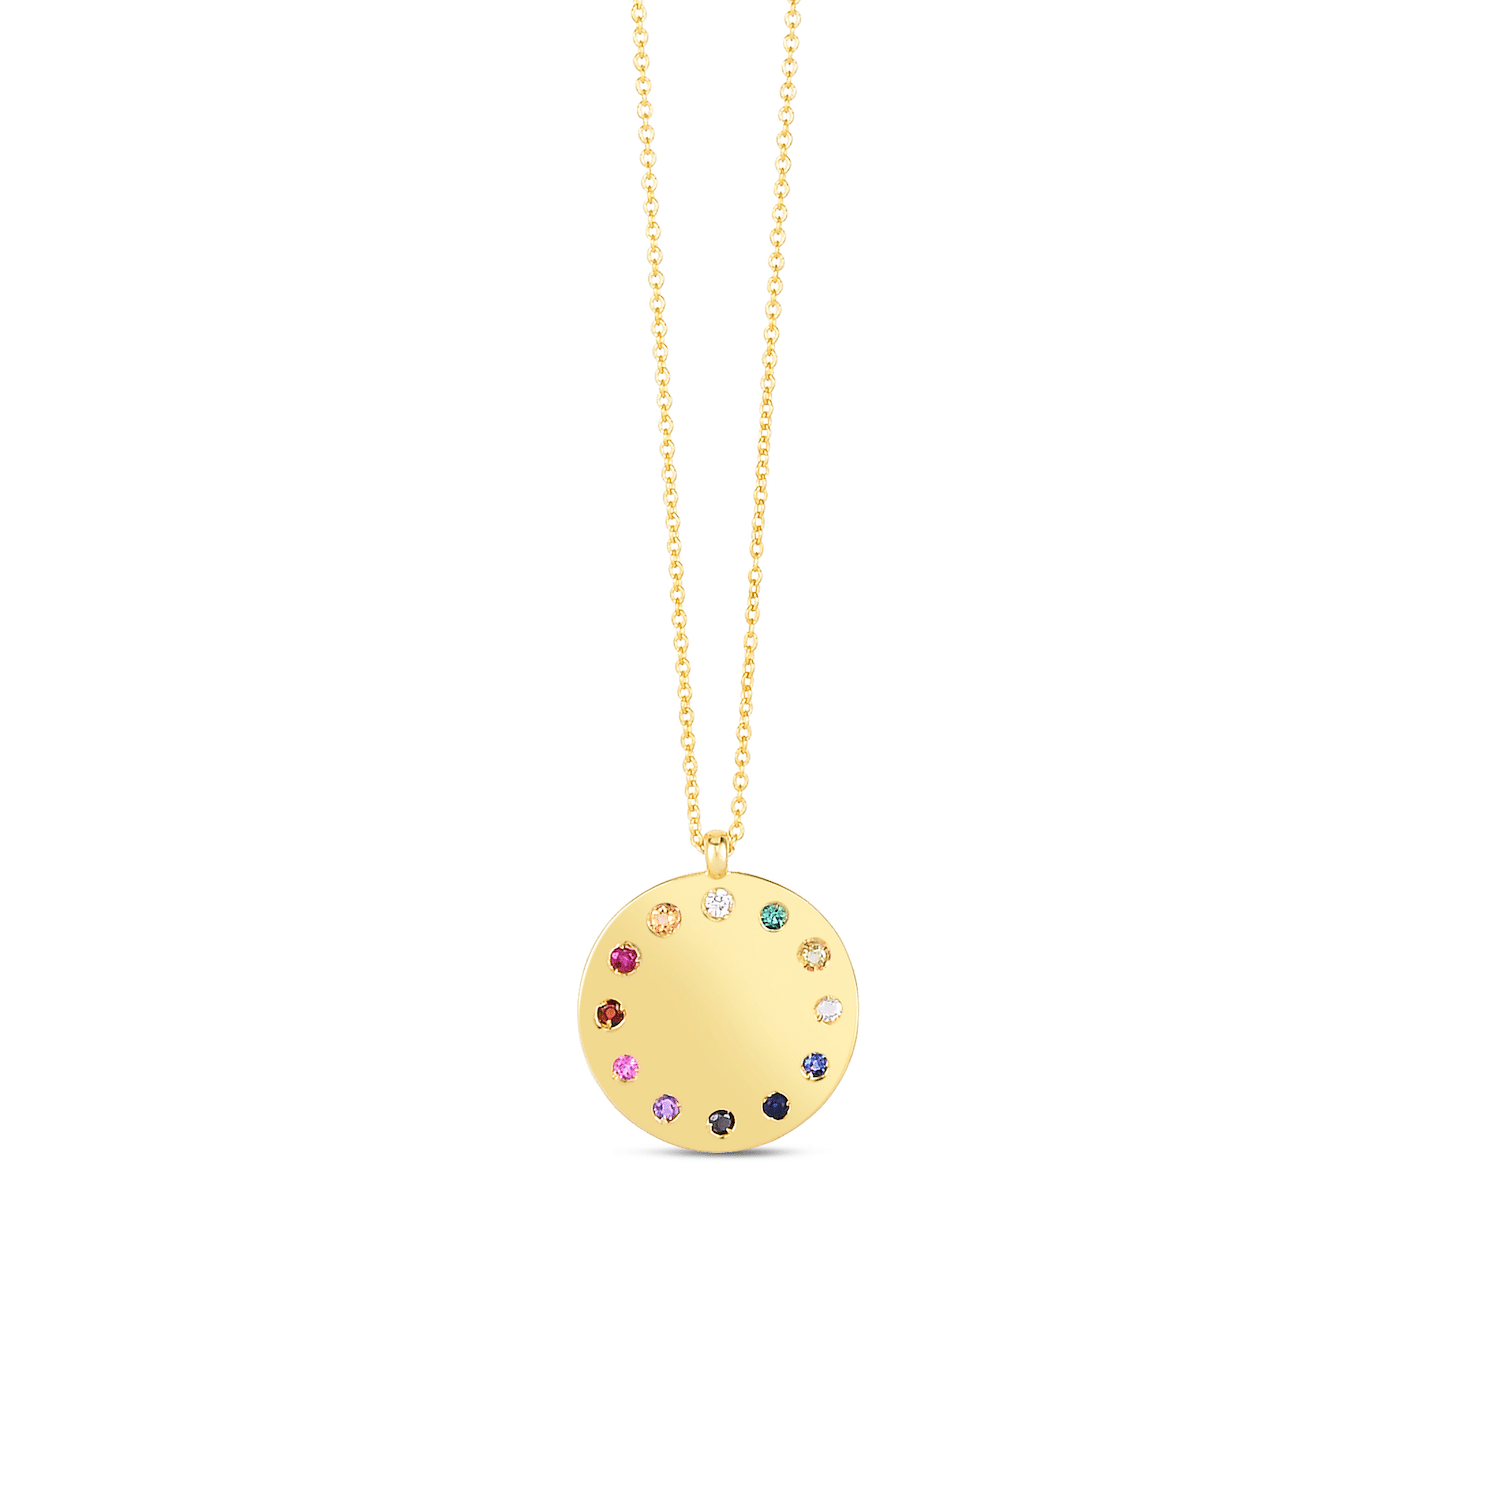 14K Yellow Gold Gemstone Diamond Dial Pendant Medallion Necklace 16"-18" Adjust.